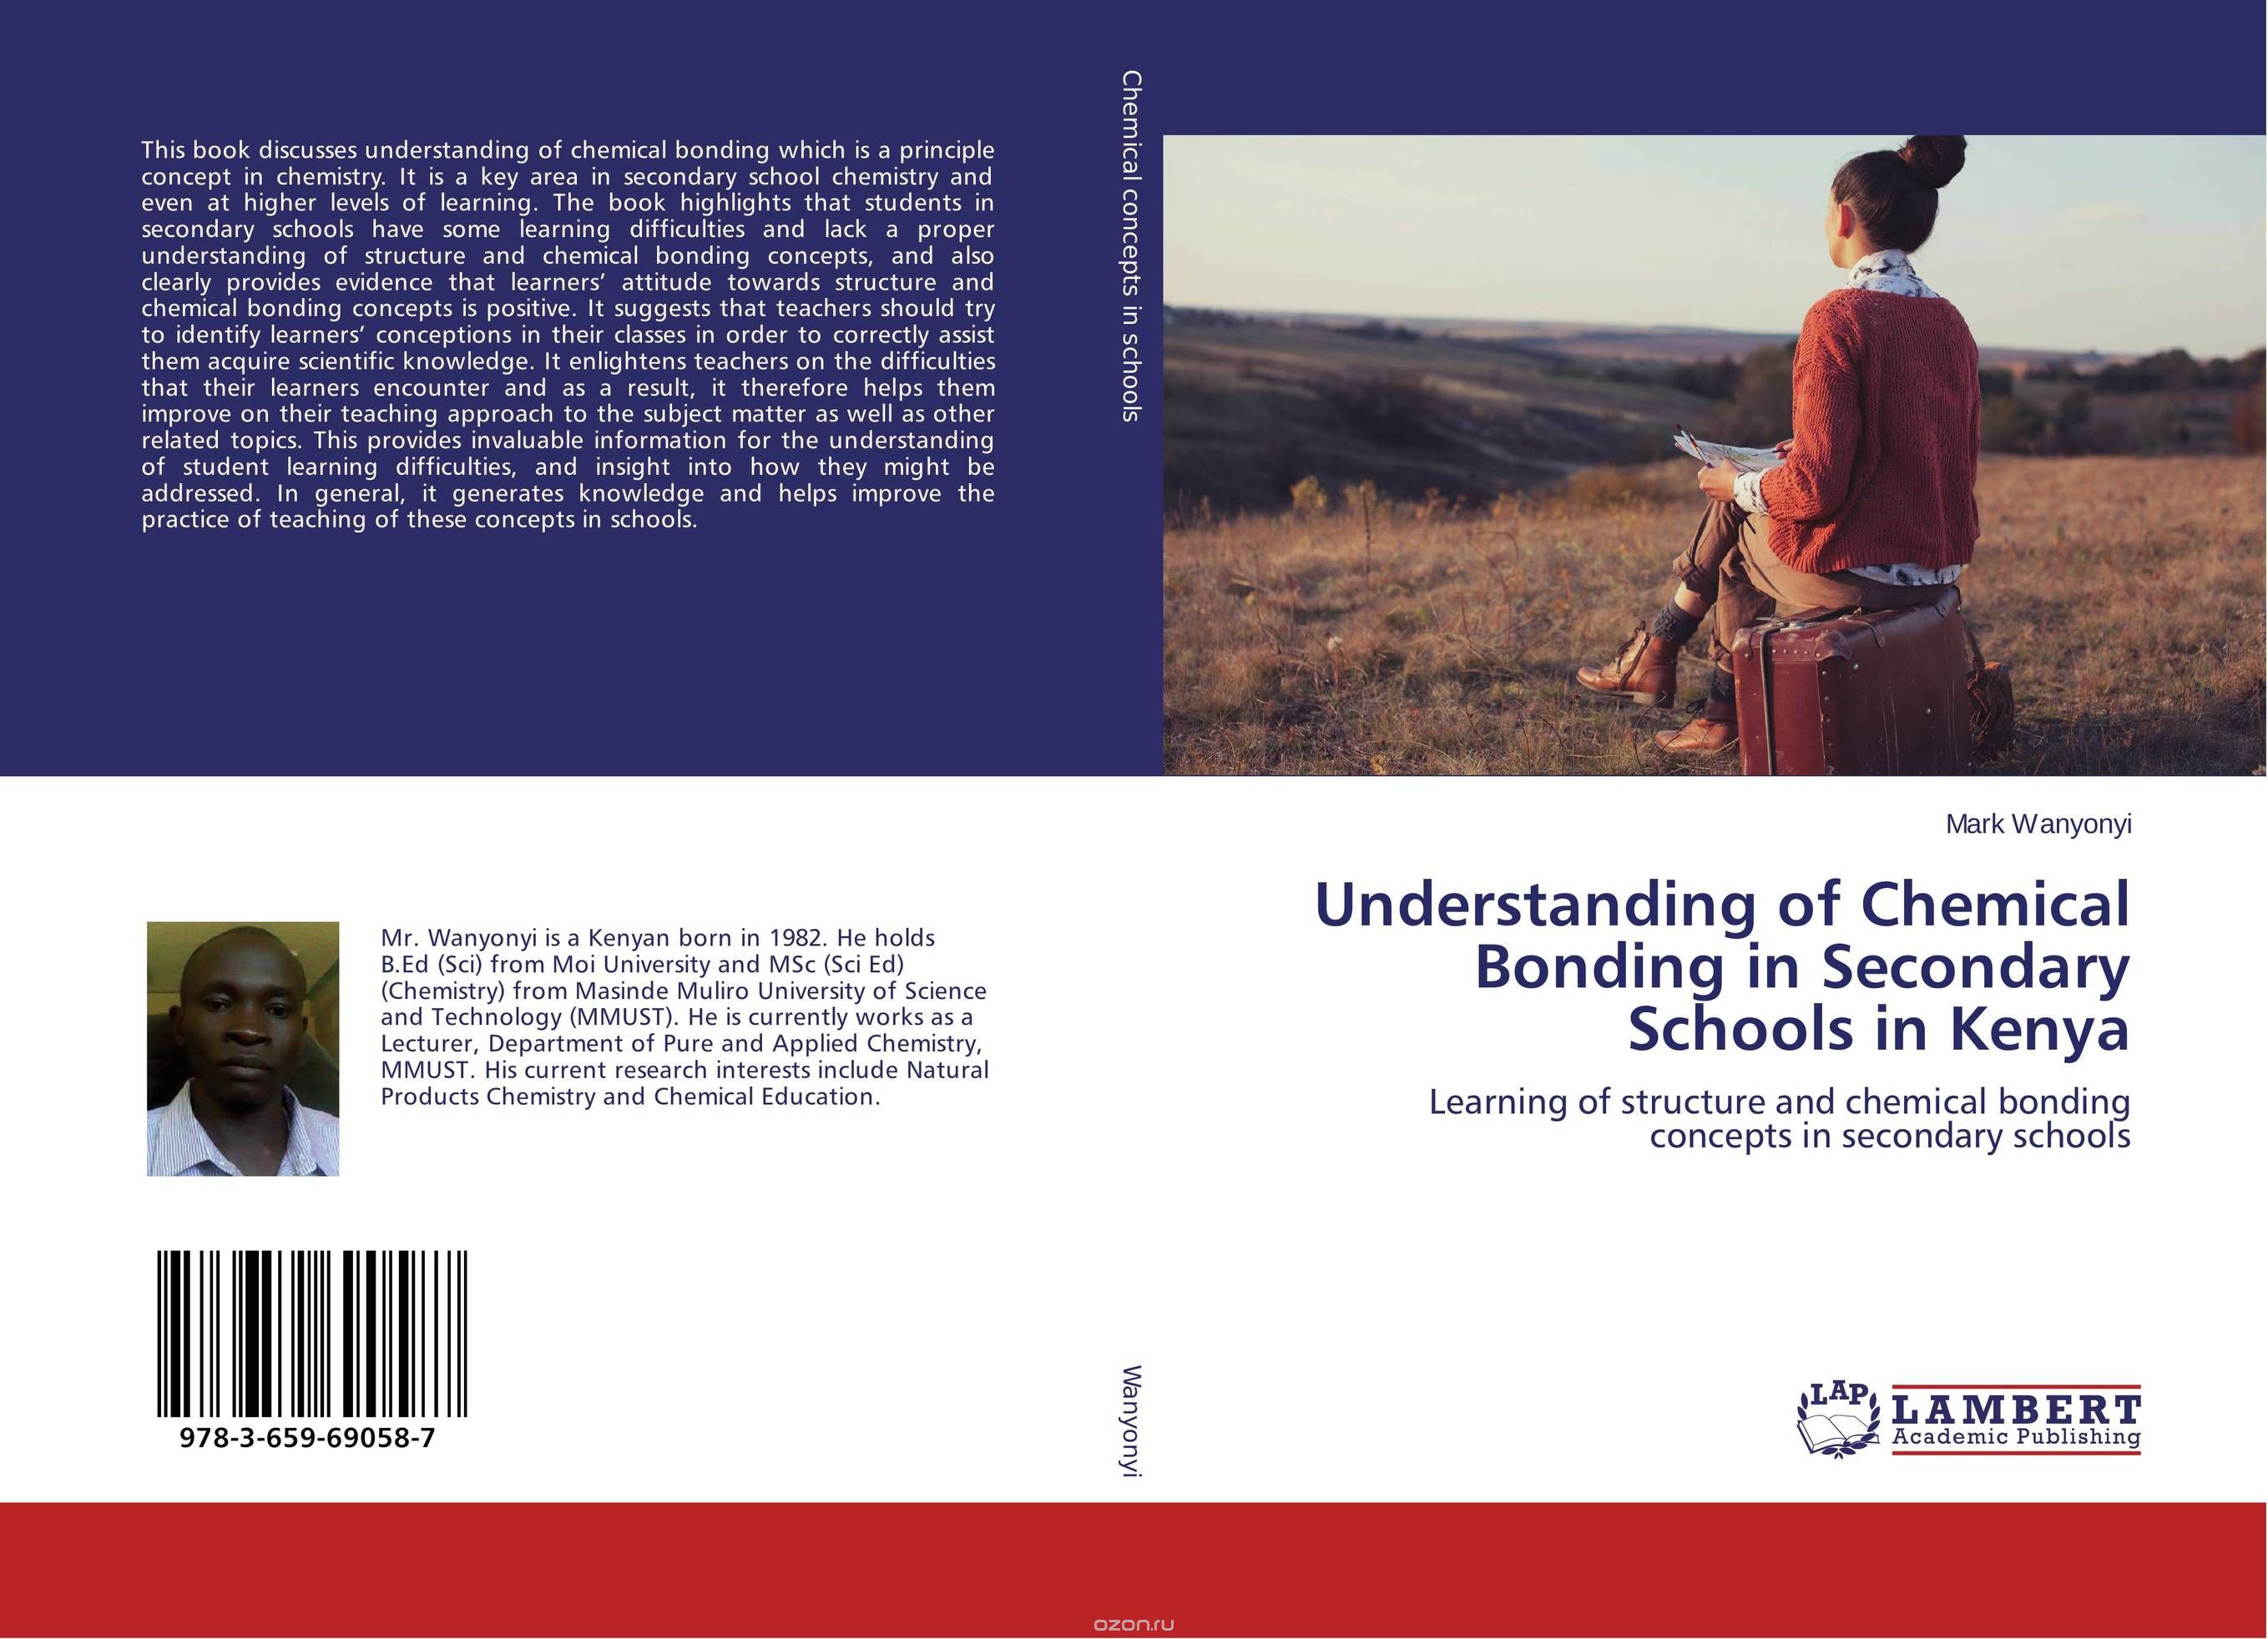 Understanding of Chemical Bonding in Secondary Schools in Kenya